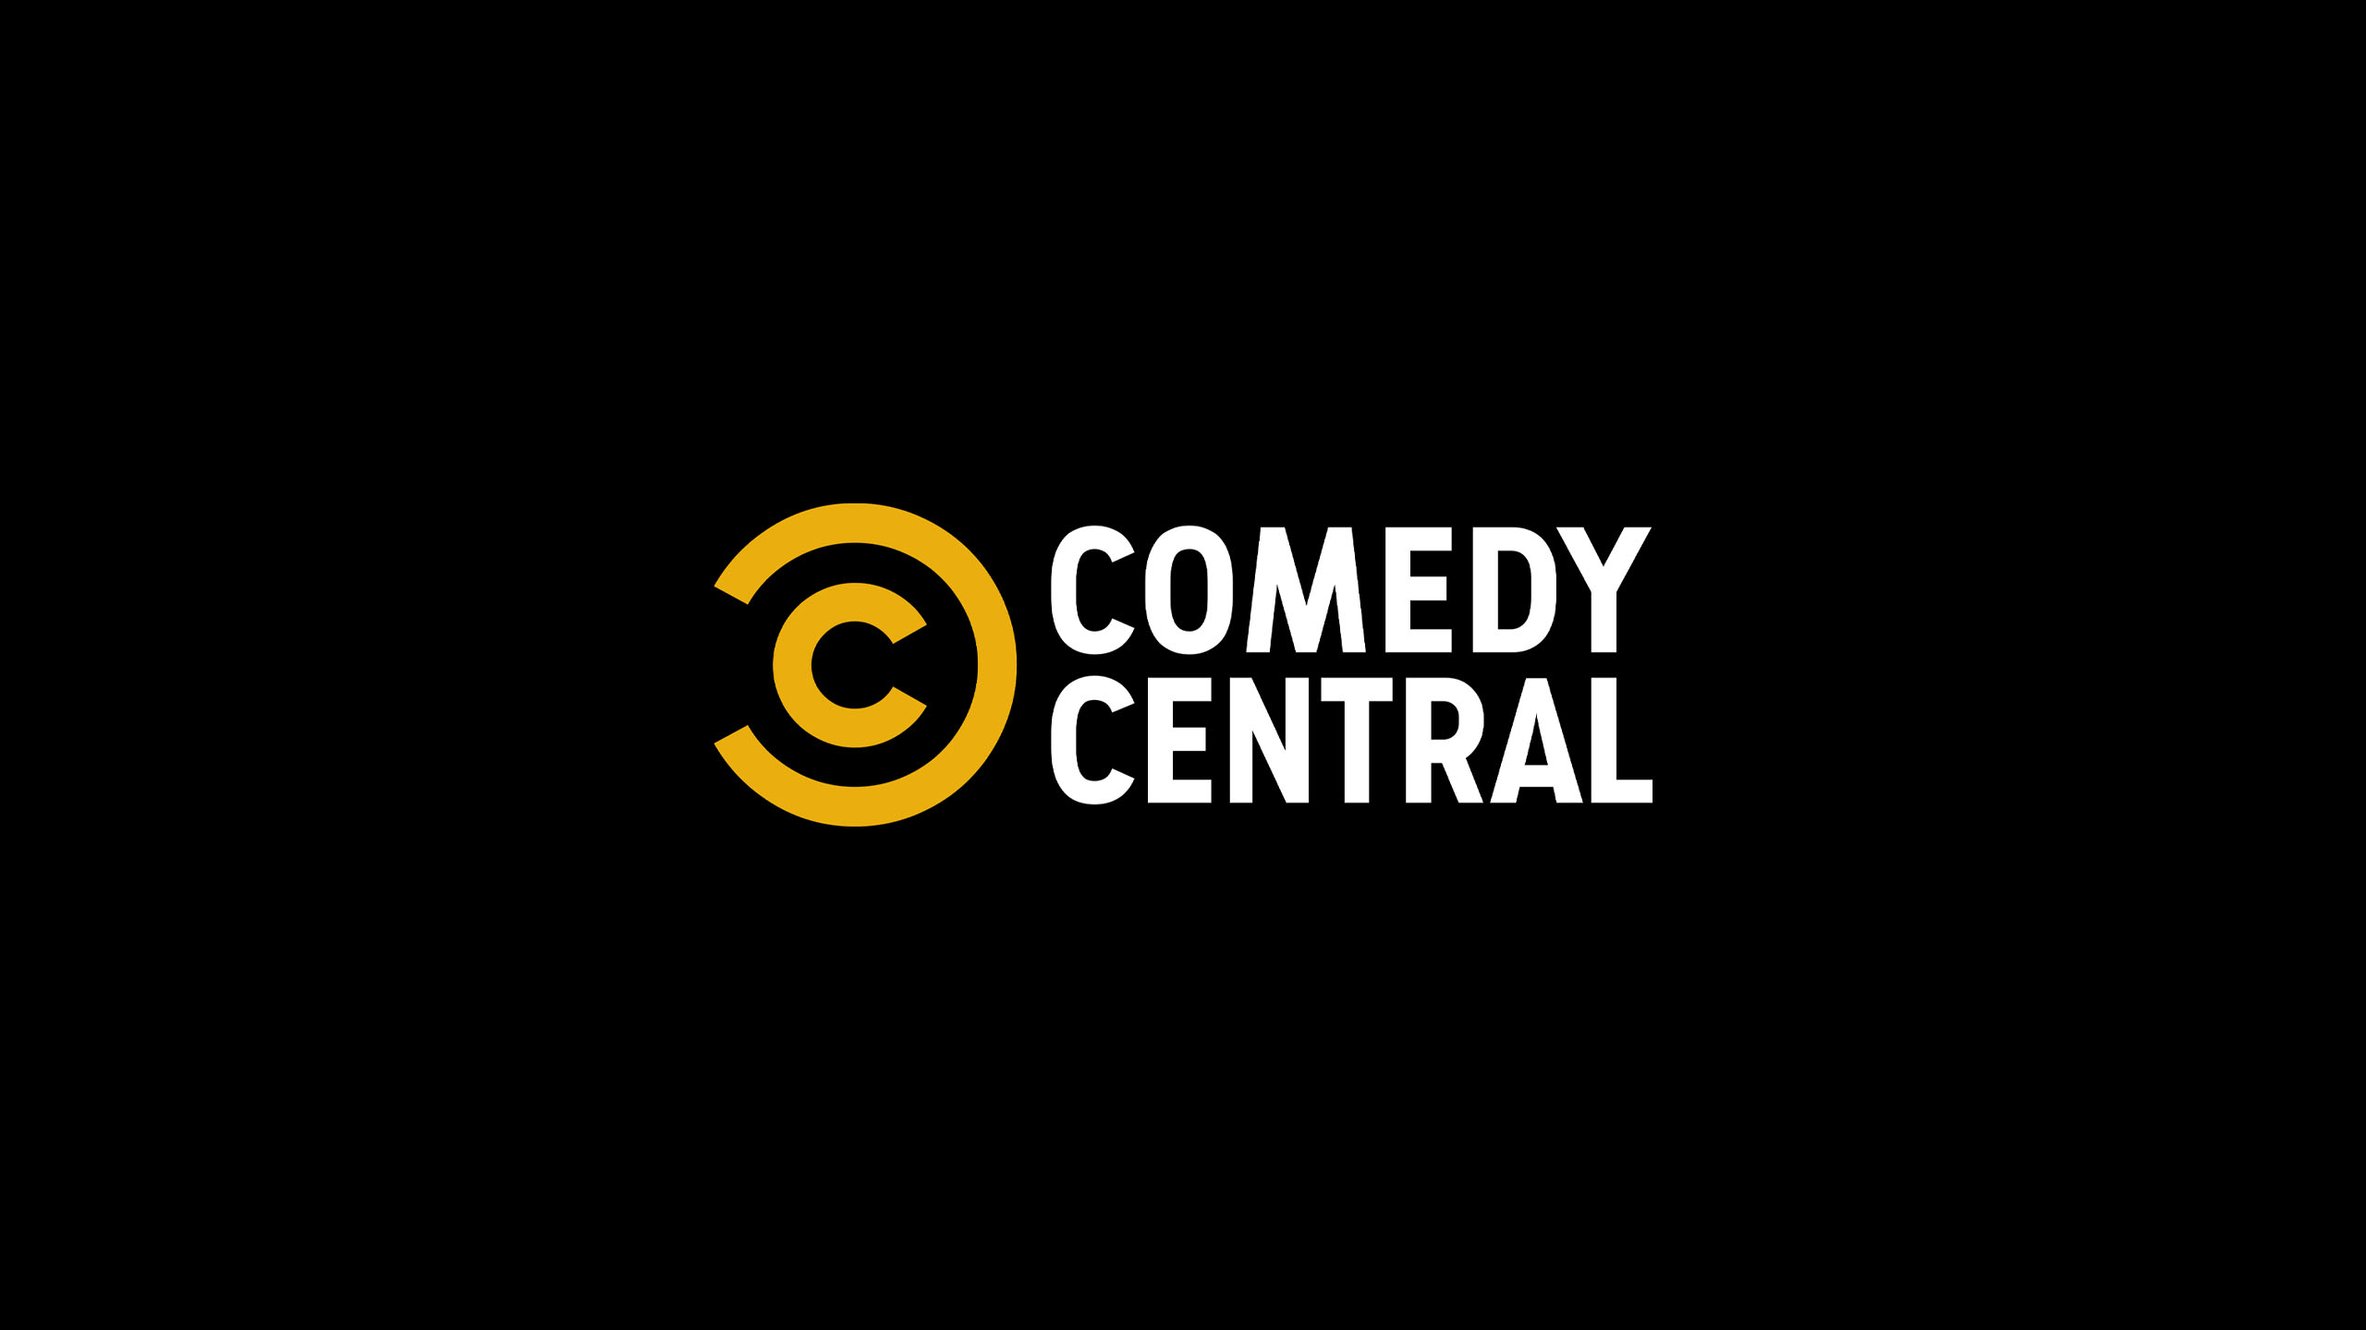 Casting Backgrounds For Comedy Central Digital Sketch/Parody